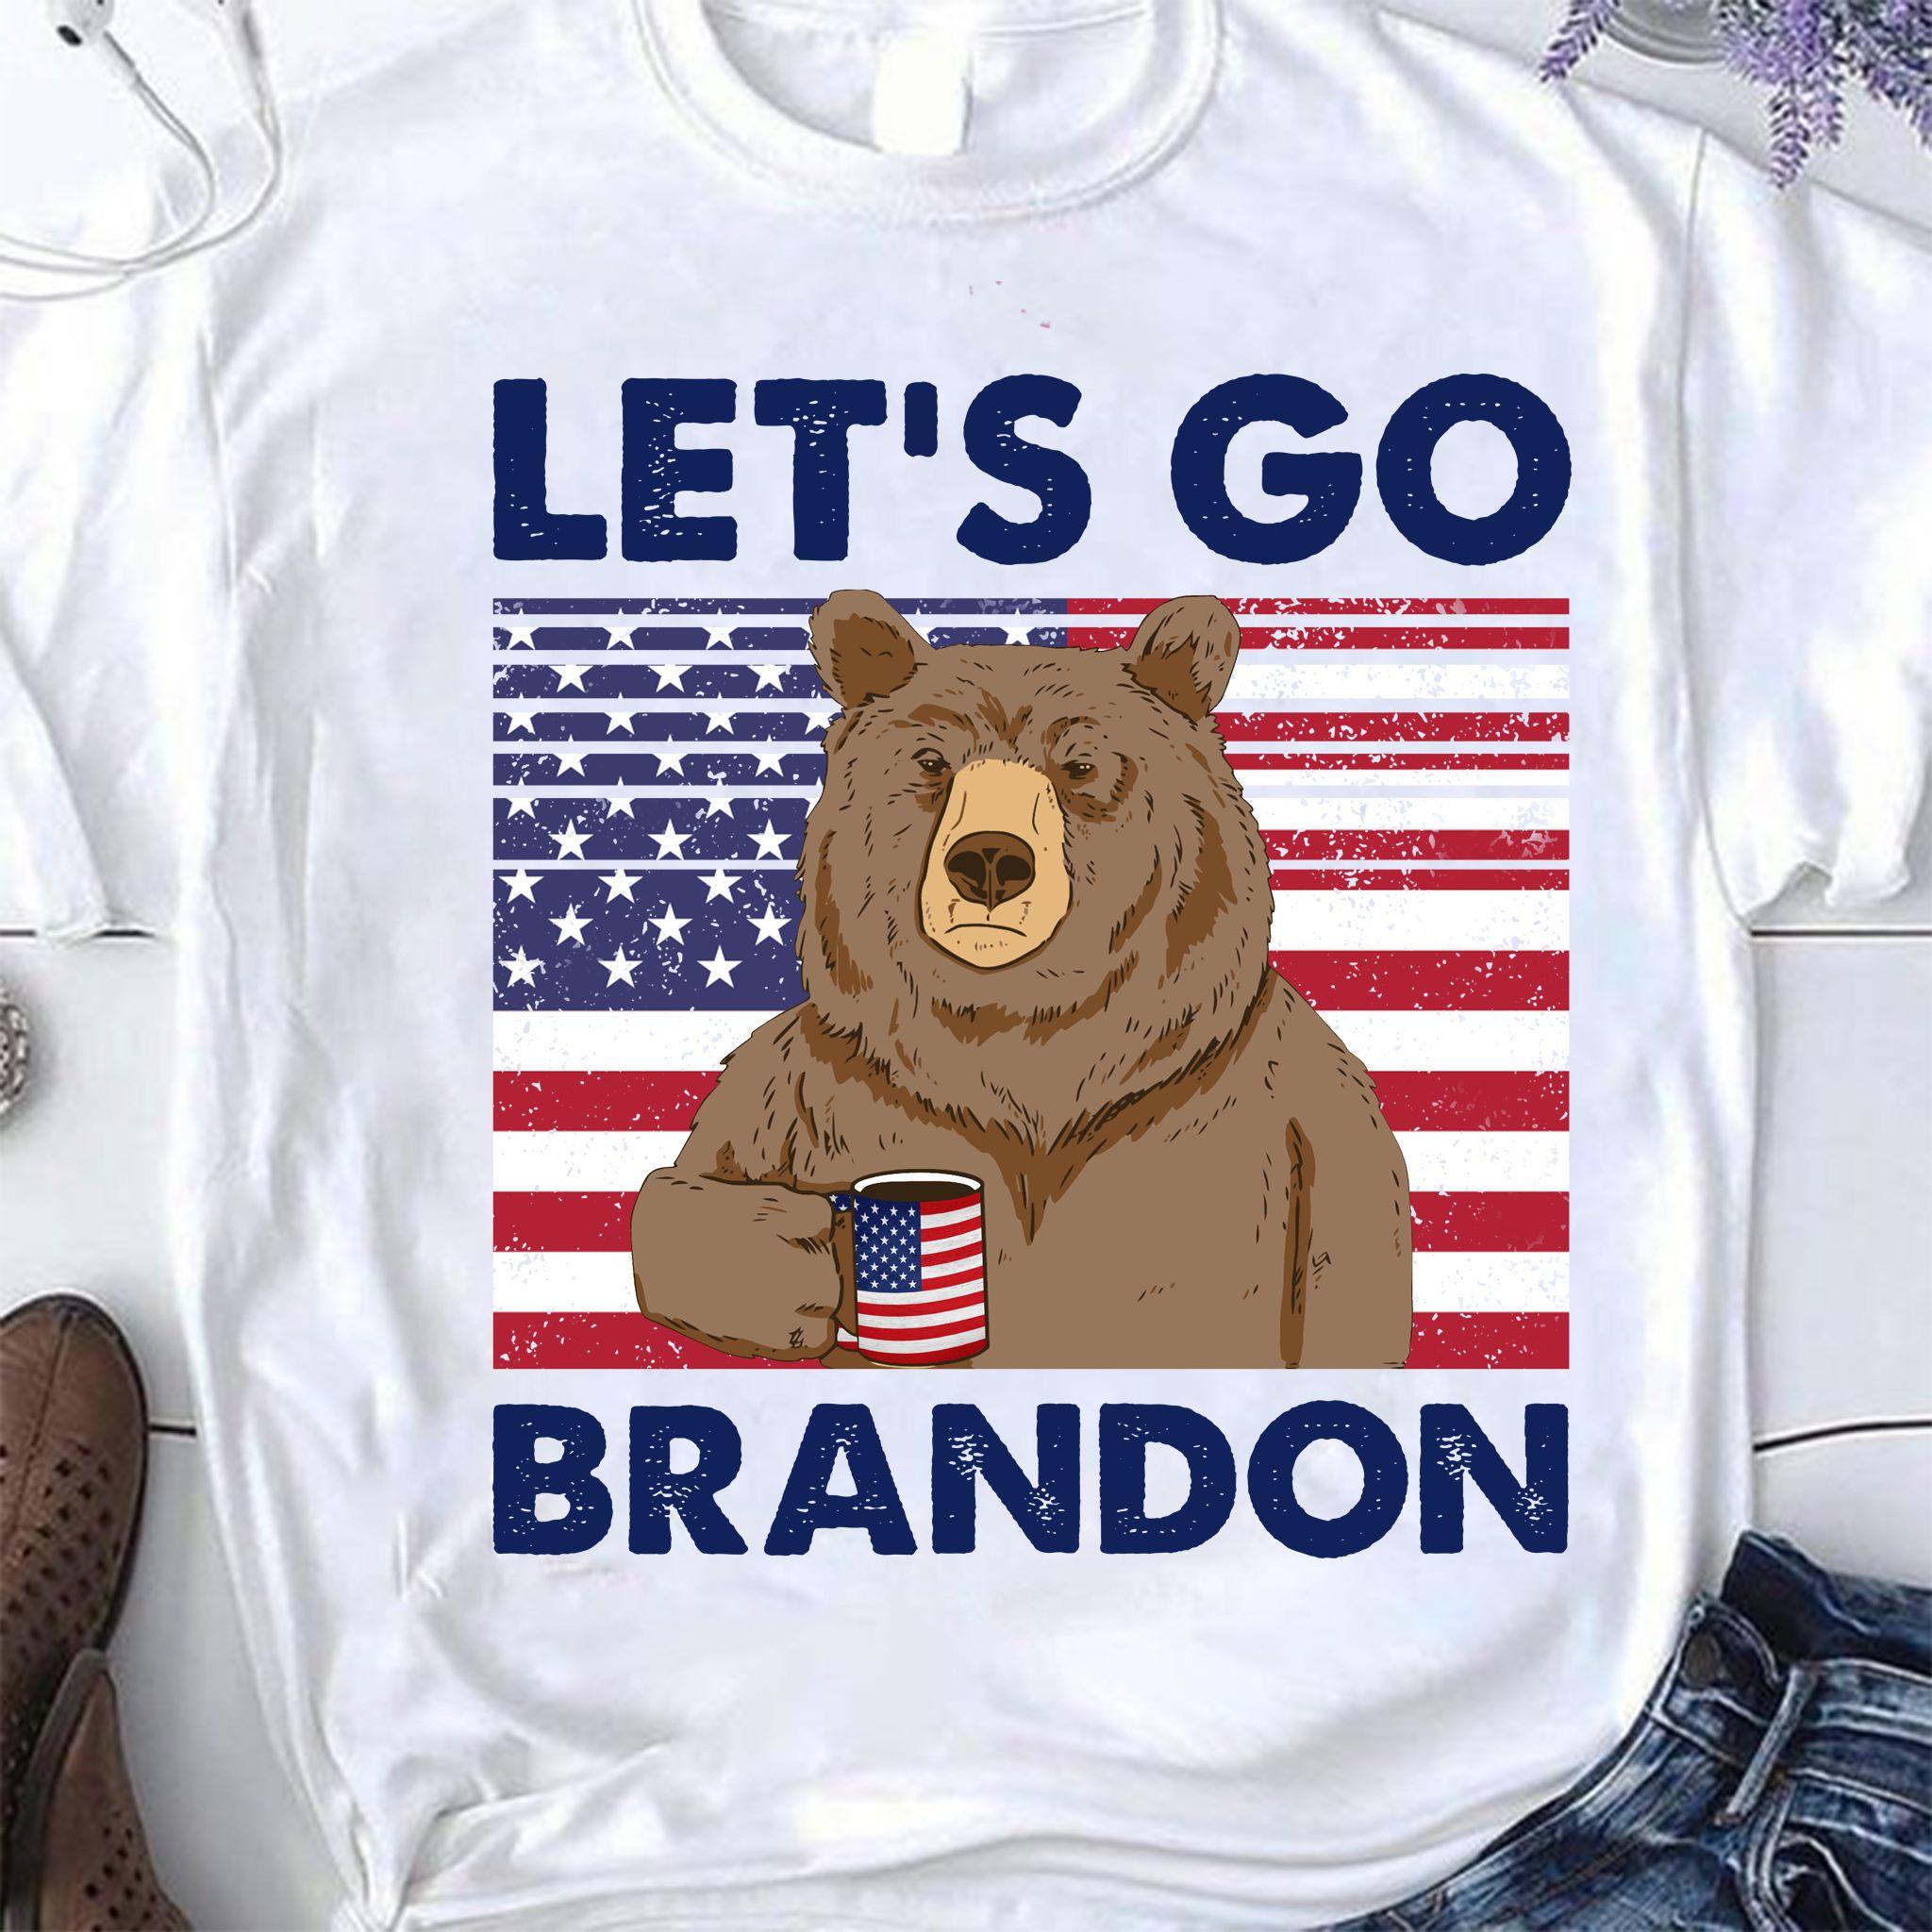 Let's go Brandon - Fvck Joe Biden, Bear and America flag